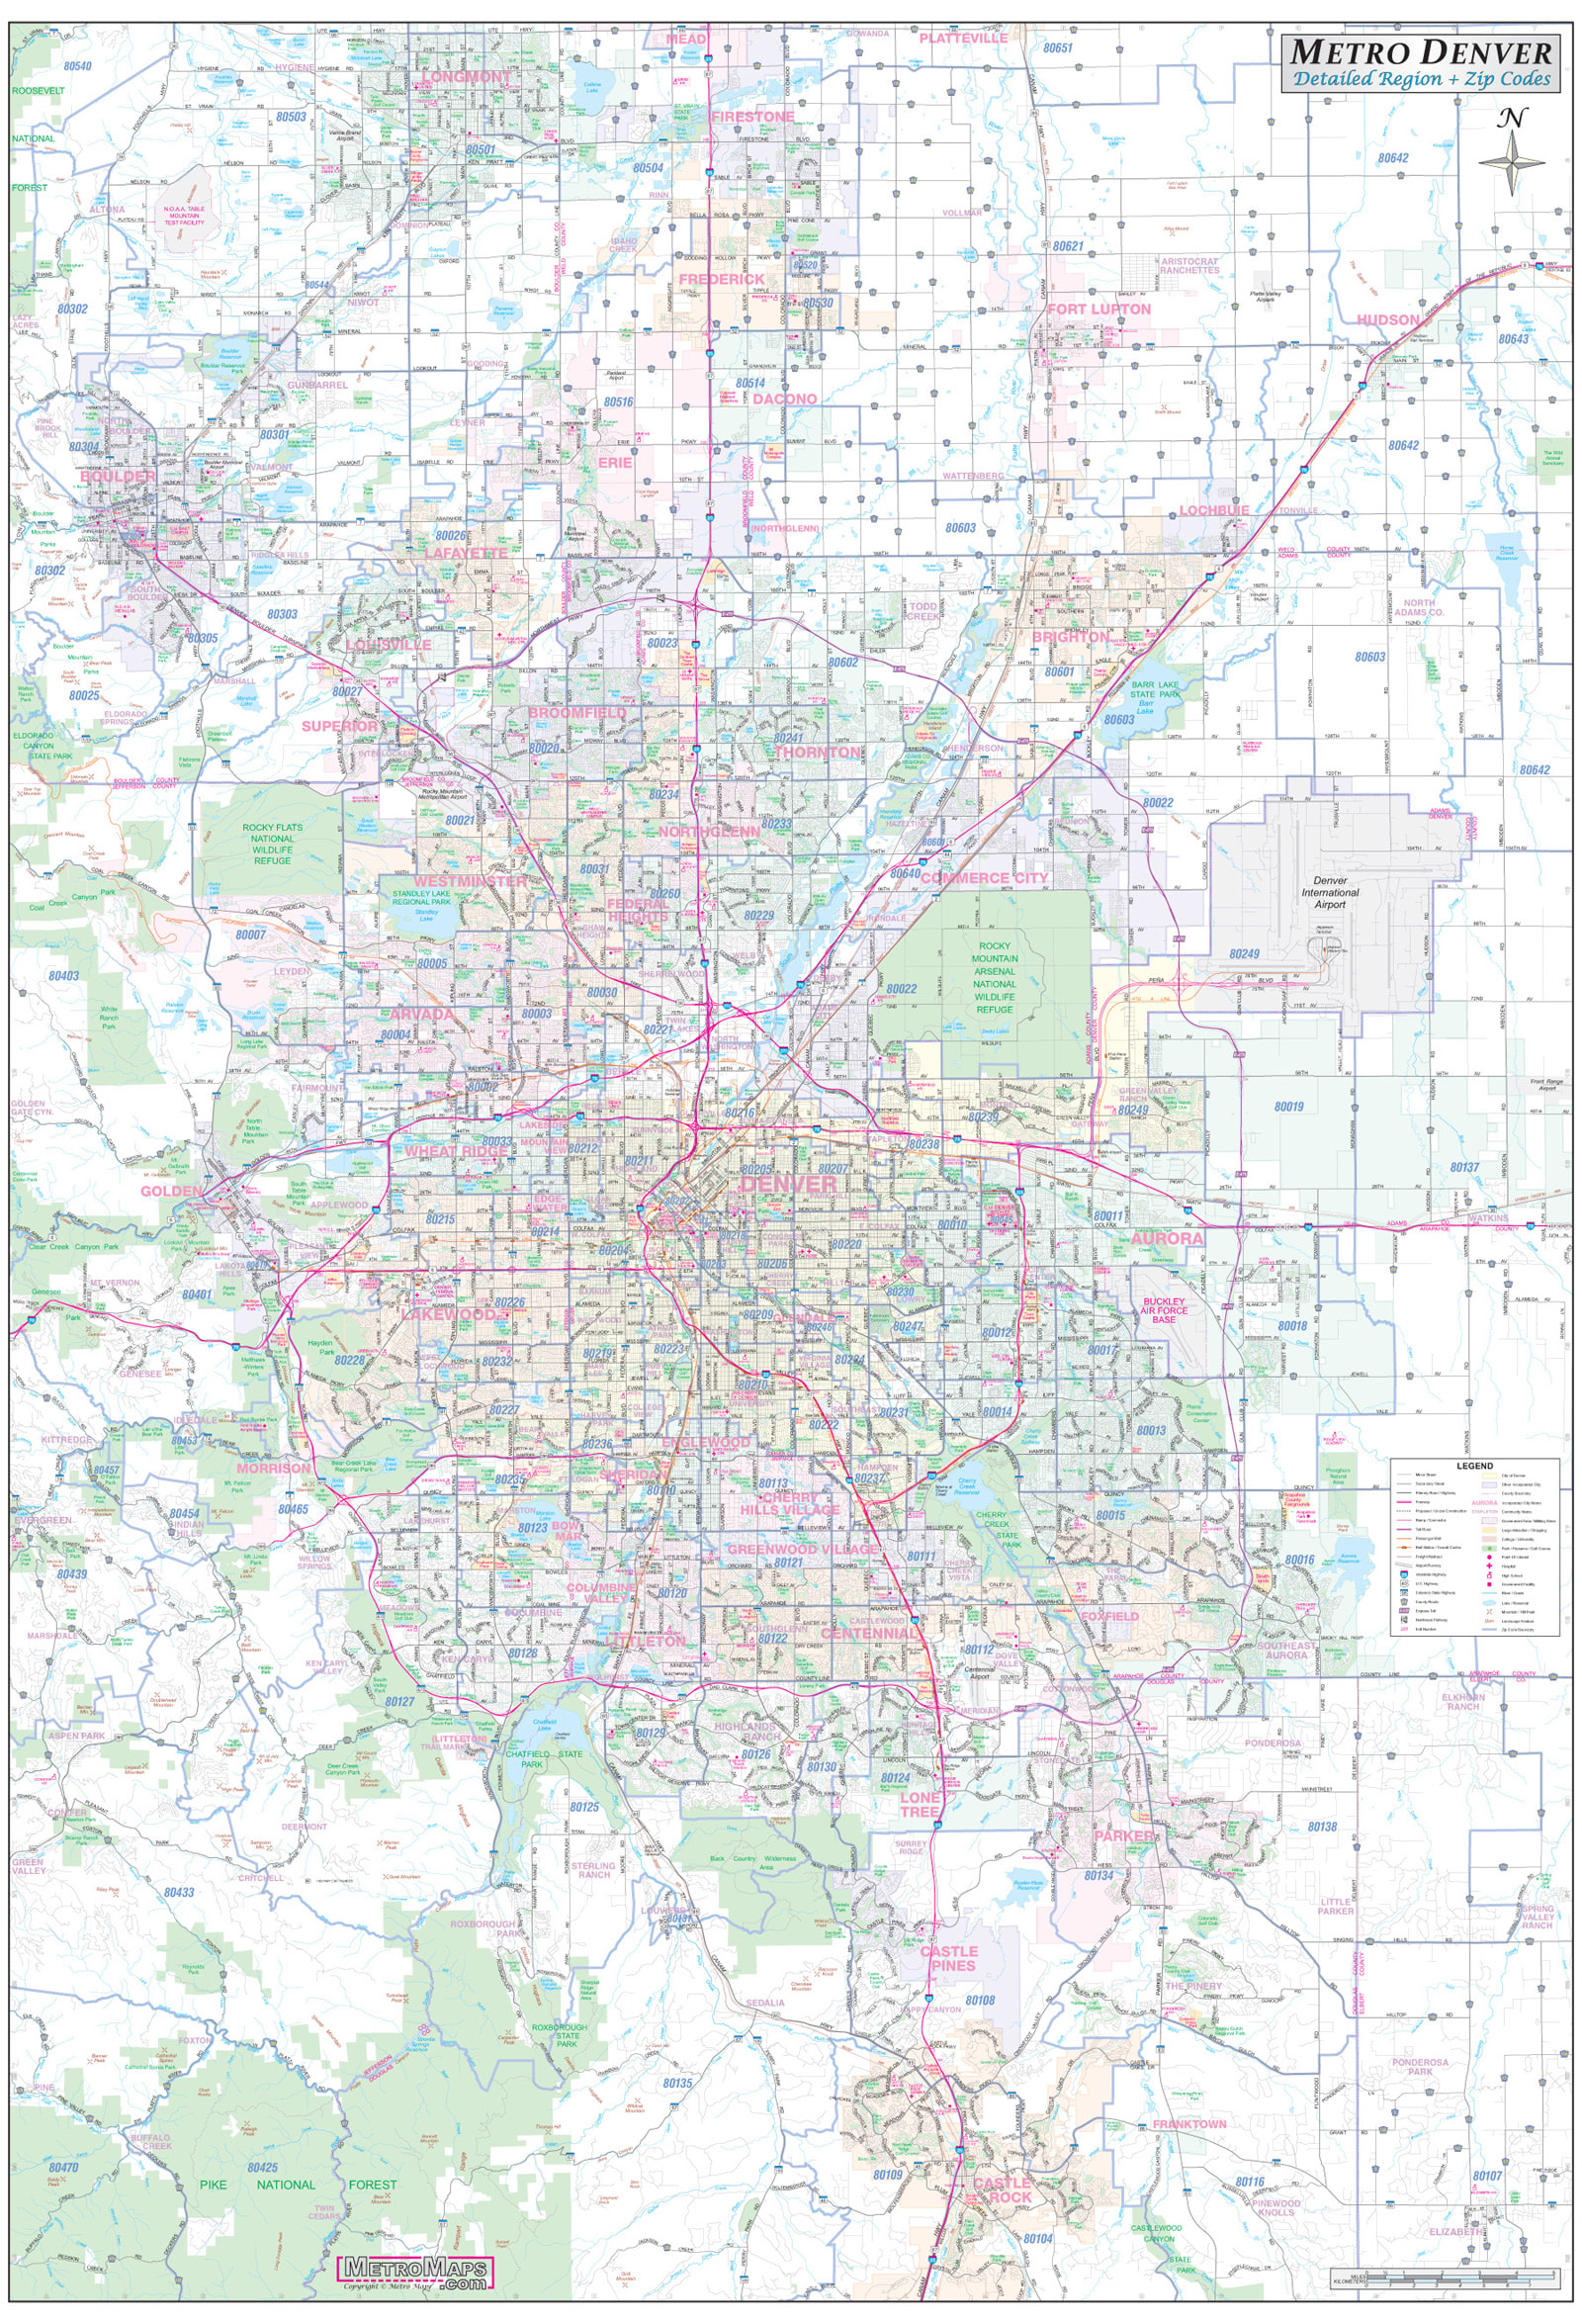 metro-denver-co-detailed-region-wall-map-w-zip-codes-metro-maps